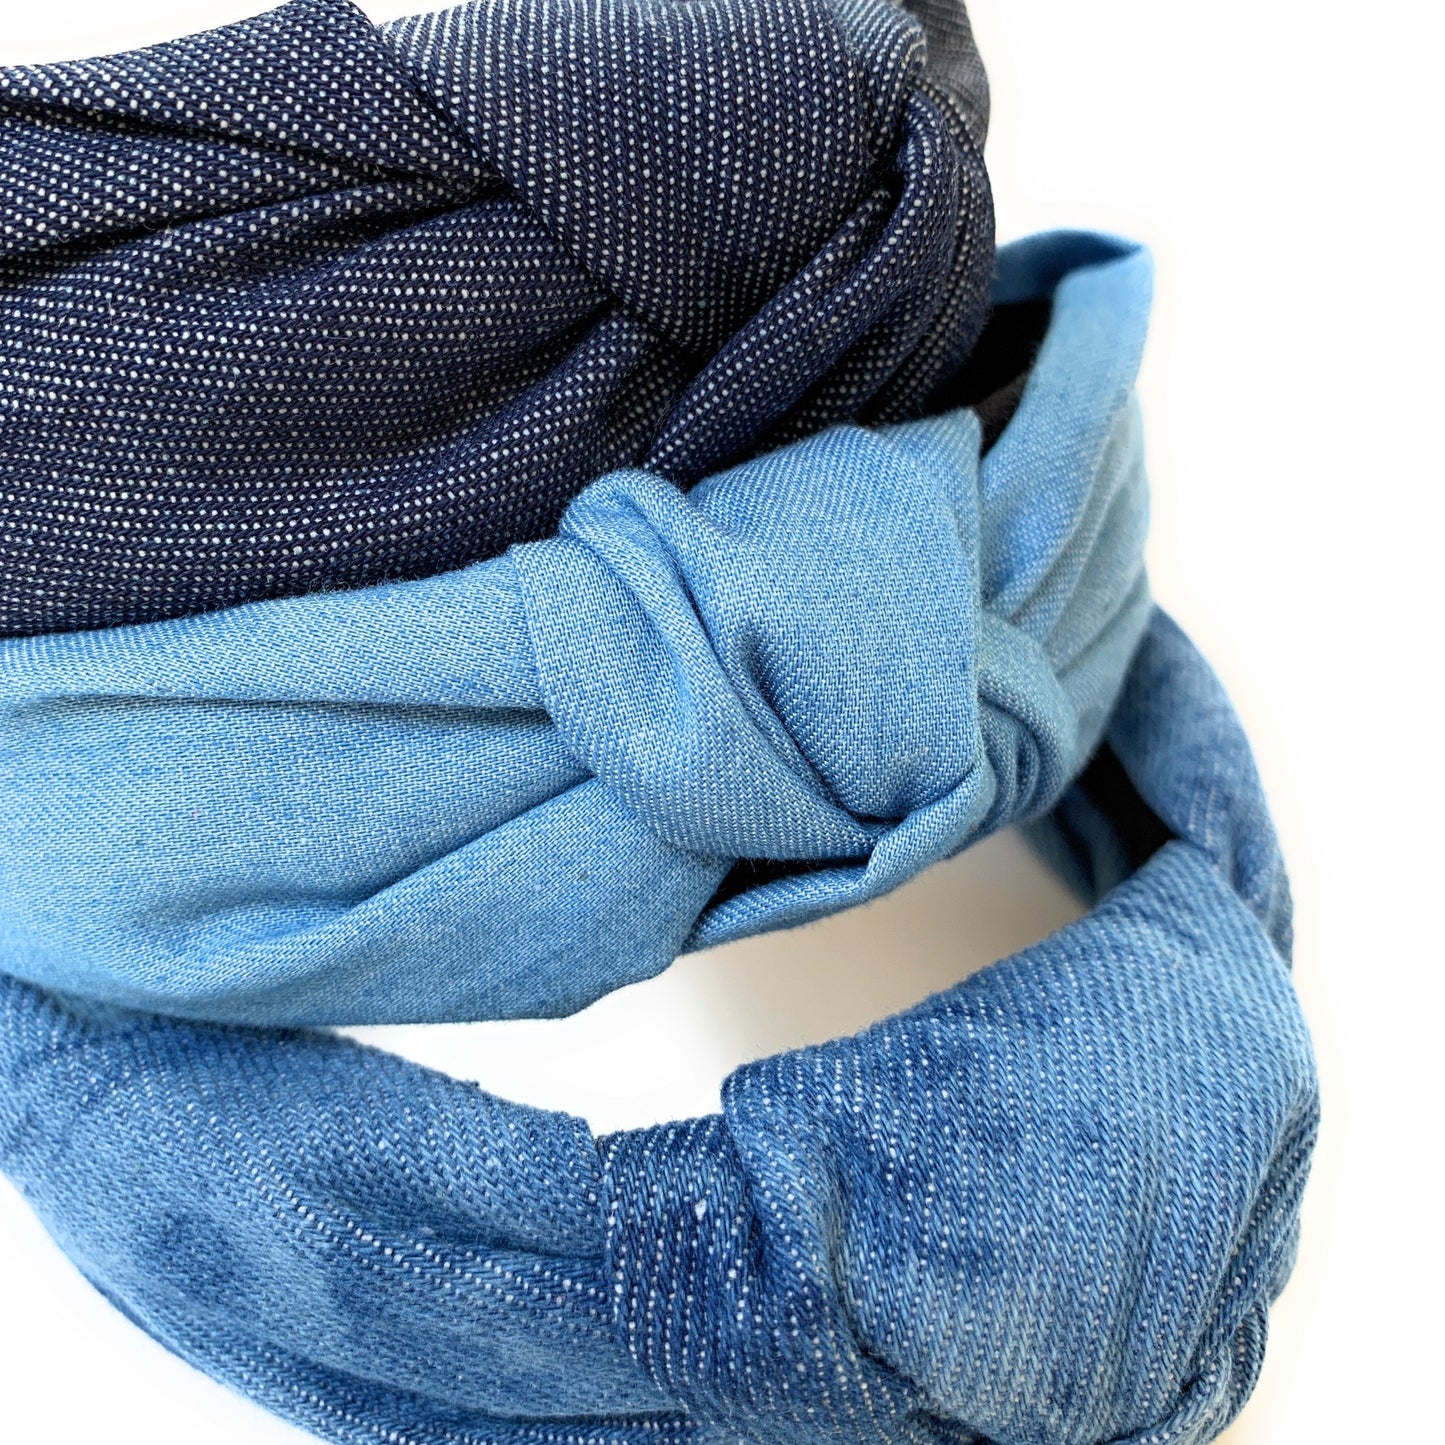 Blue Denim Top Knotted Headband